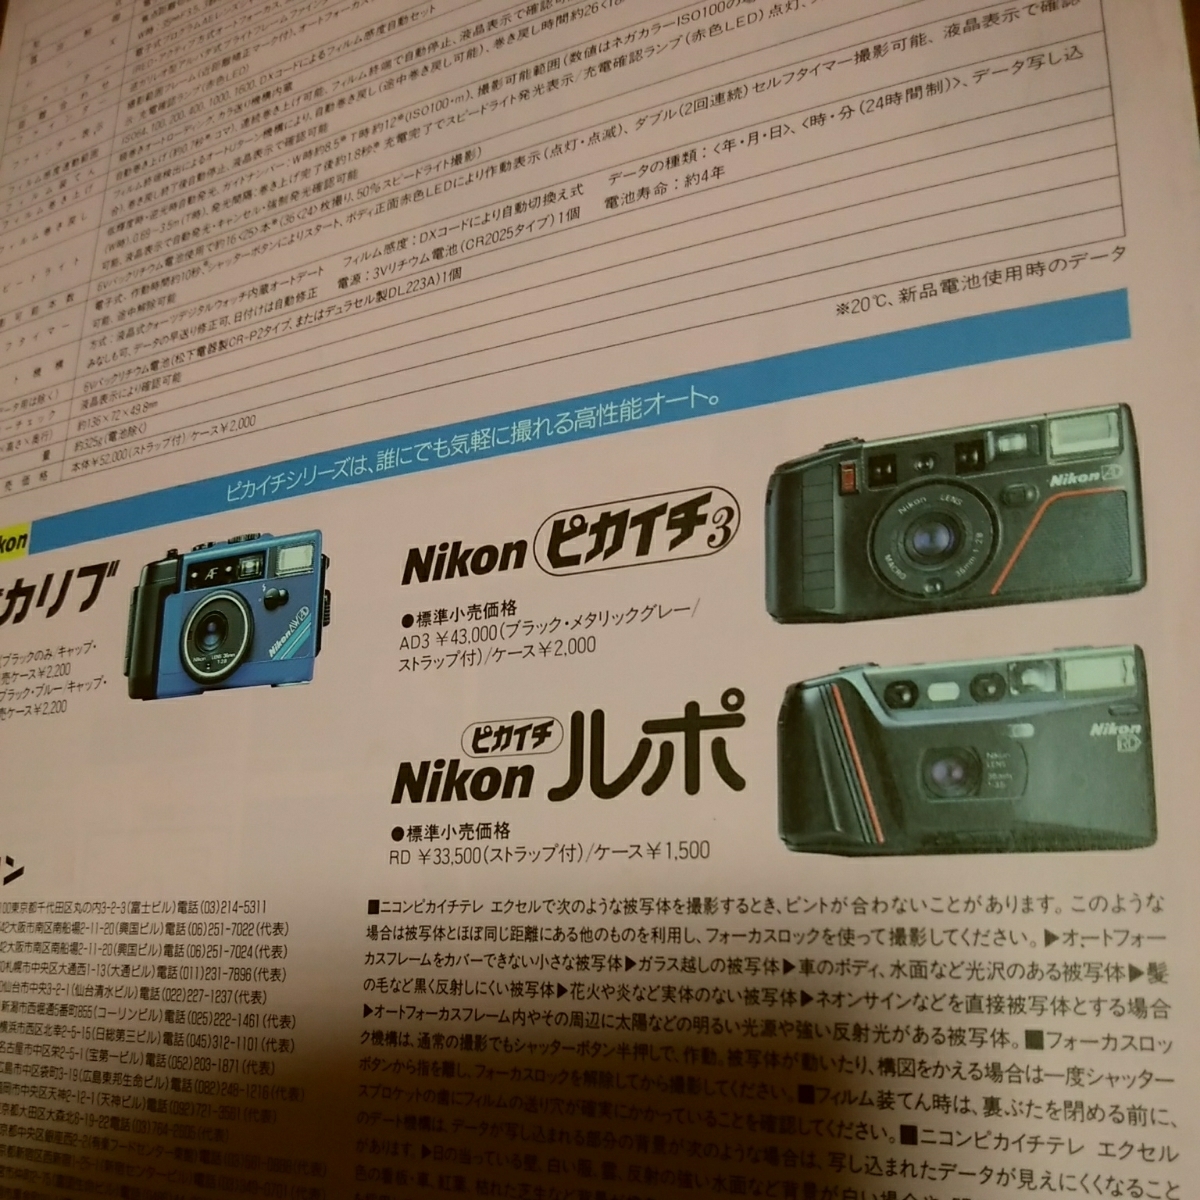 0Nikon Nikon tere Excel camera catalog 1988 year ....